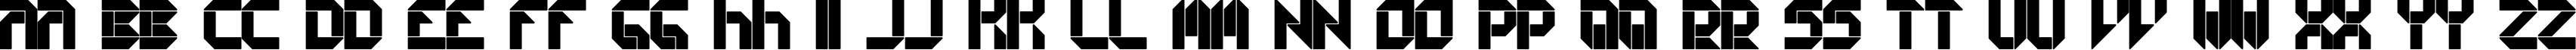 Пример написания английского алфавита шрифтом Collective S BRK